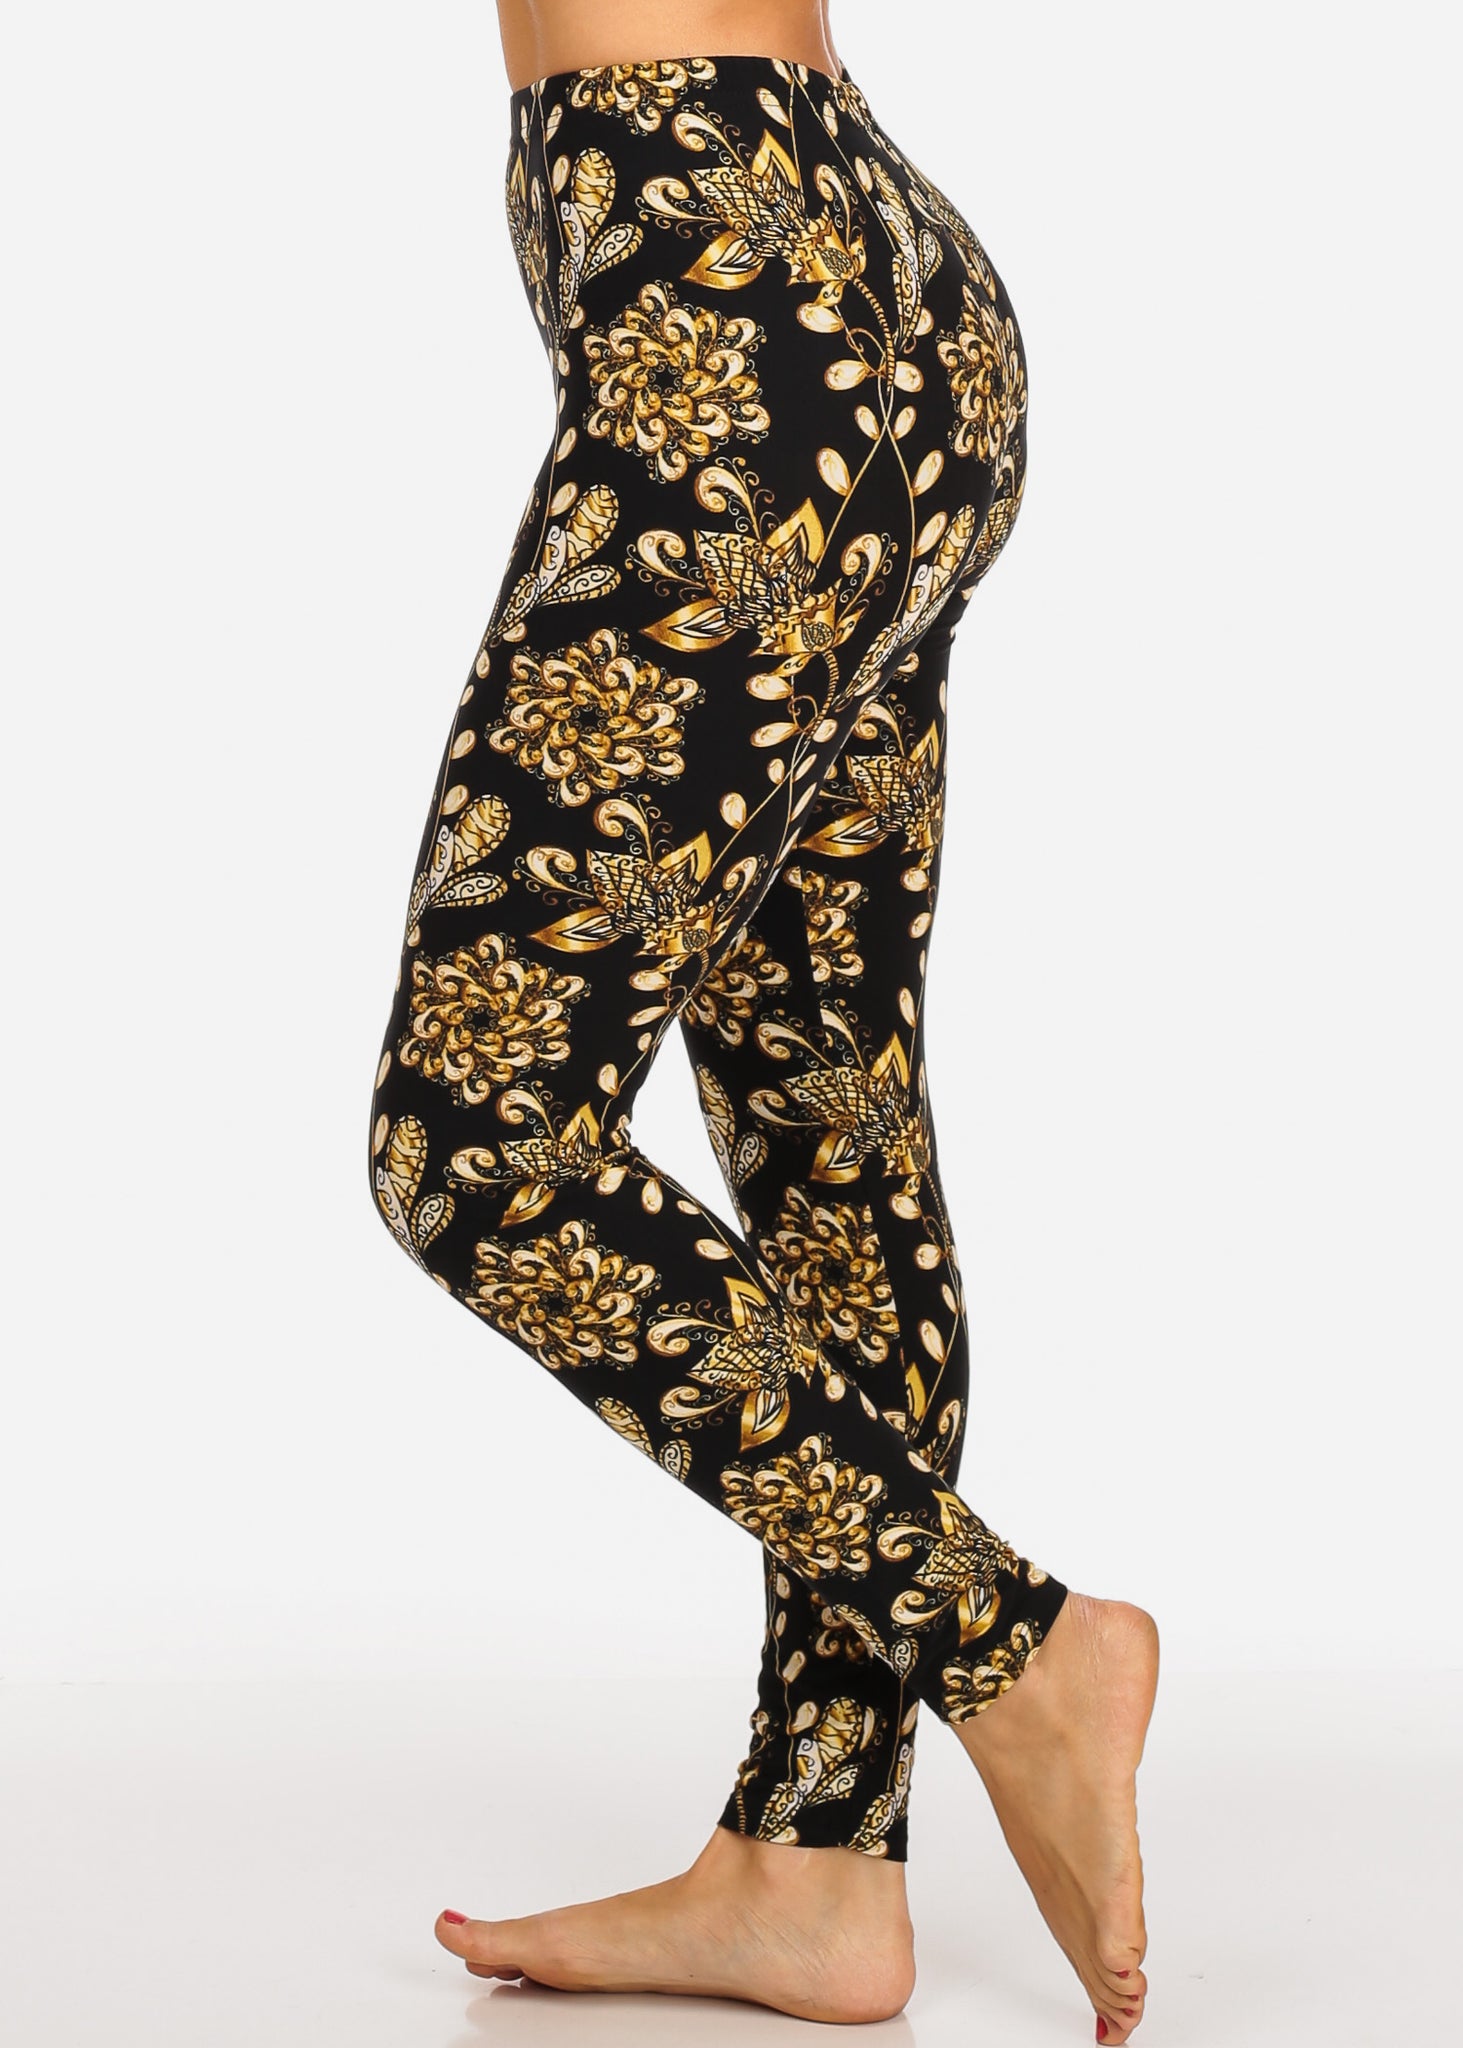 Gold Pattern Design Multi Color Women's Leggings Skinny Leg PantS F656 –  One Size Fits